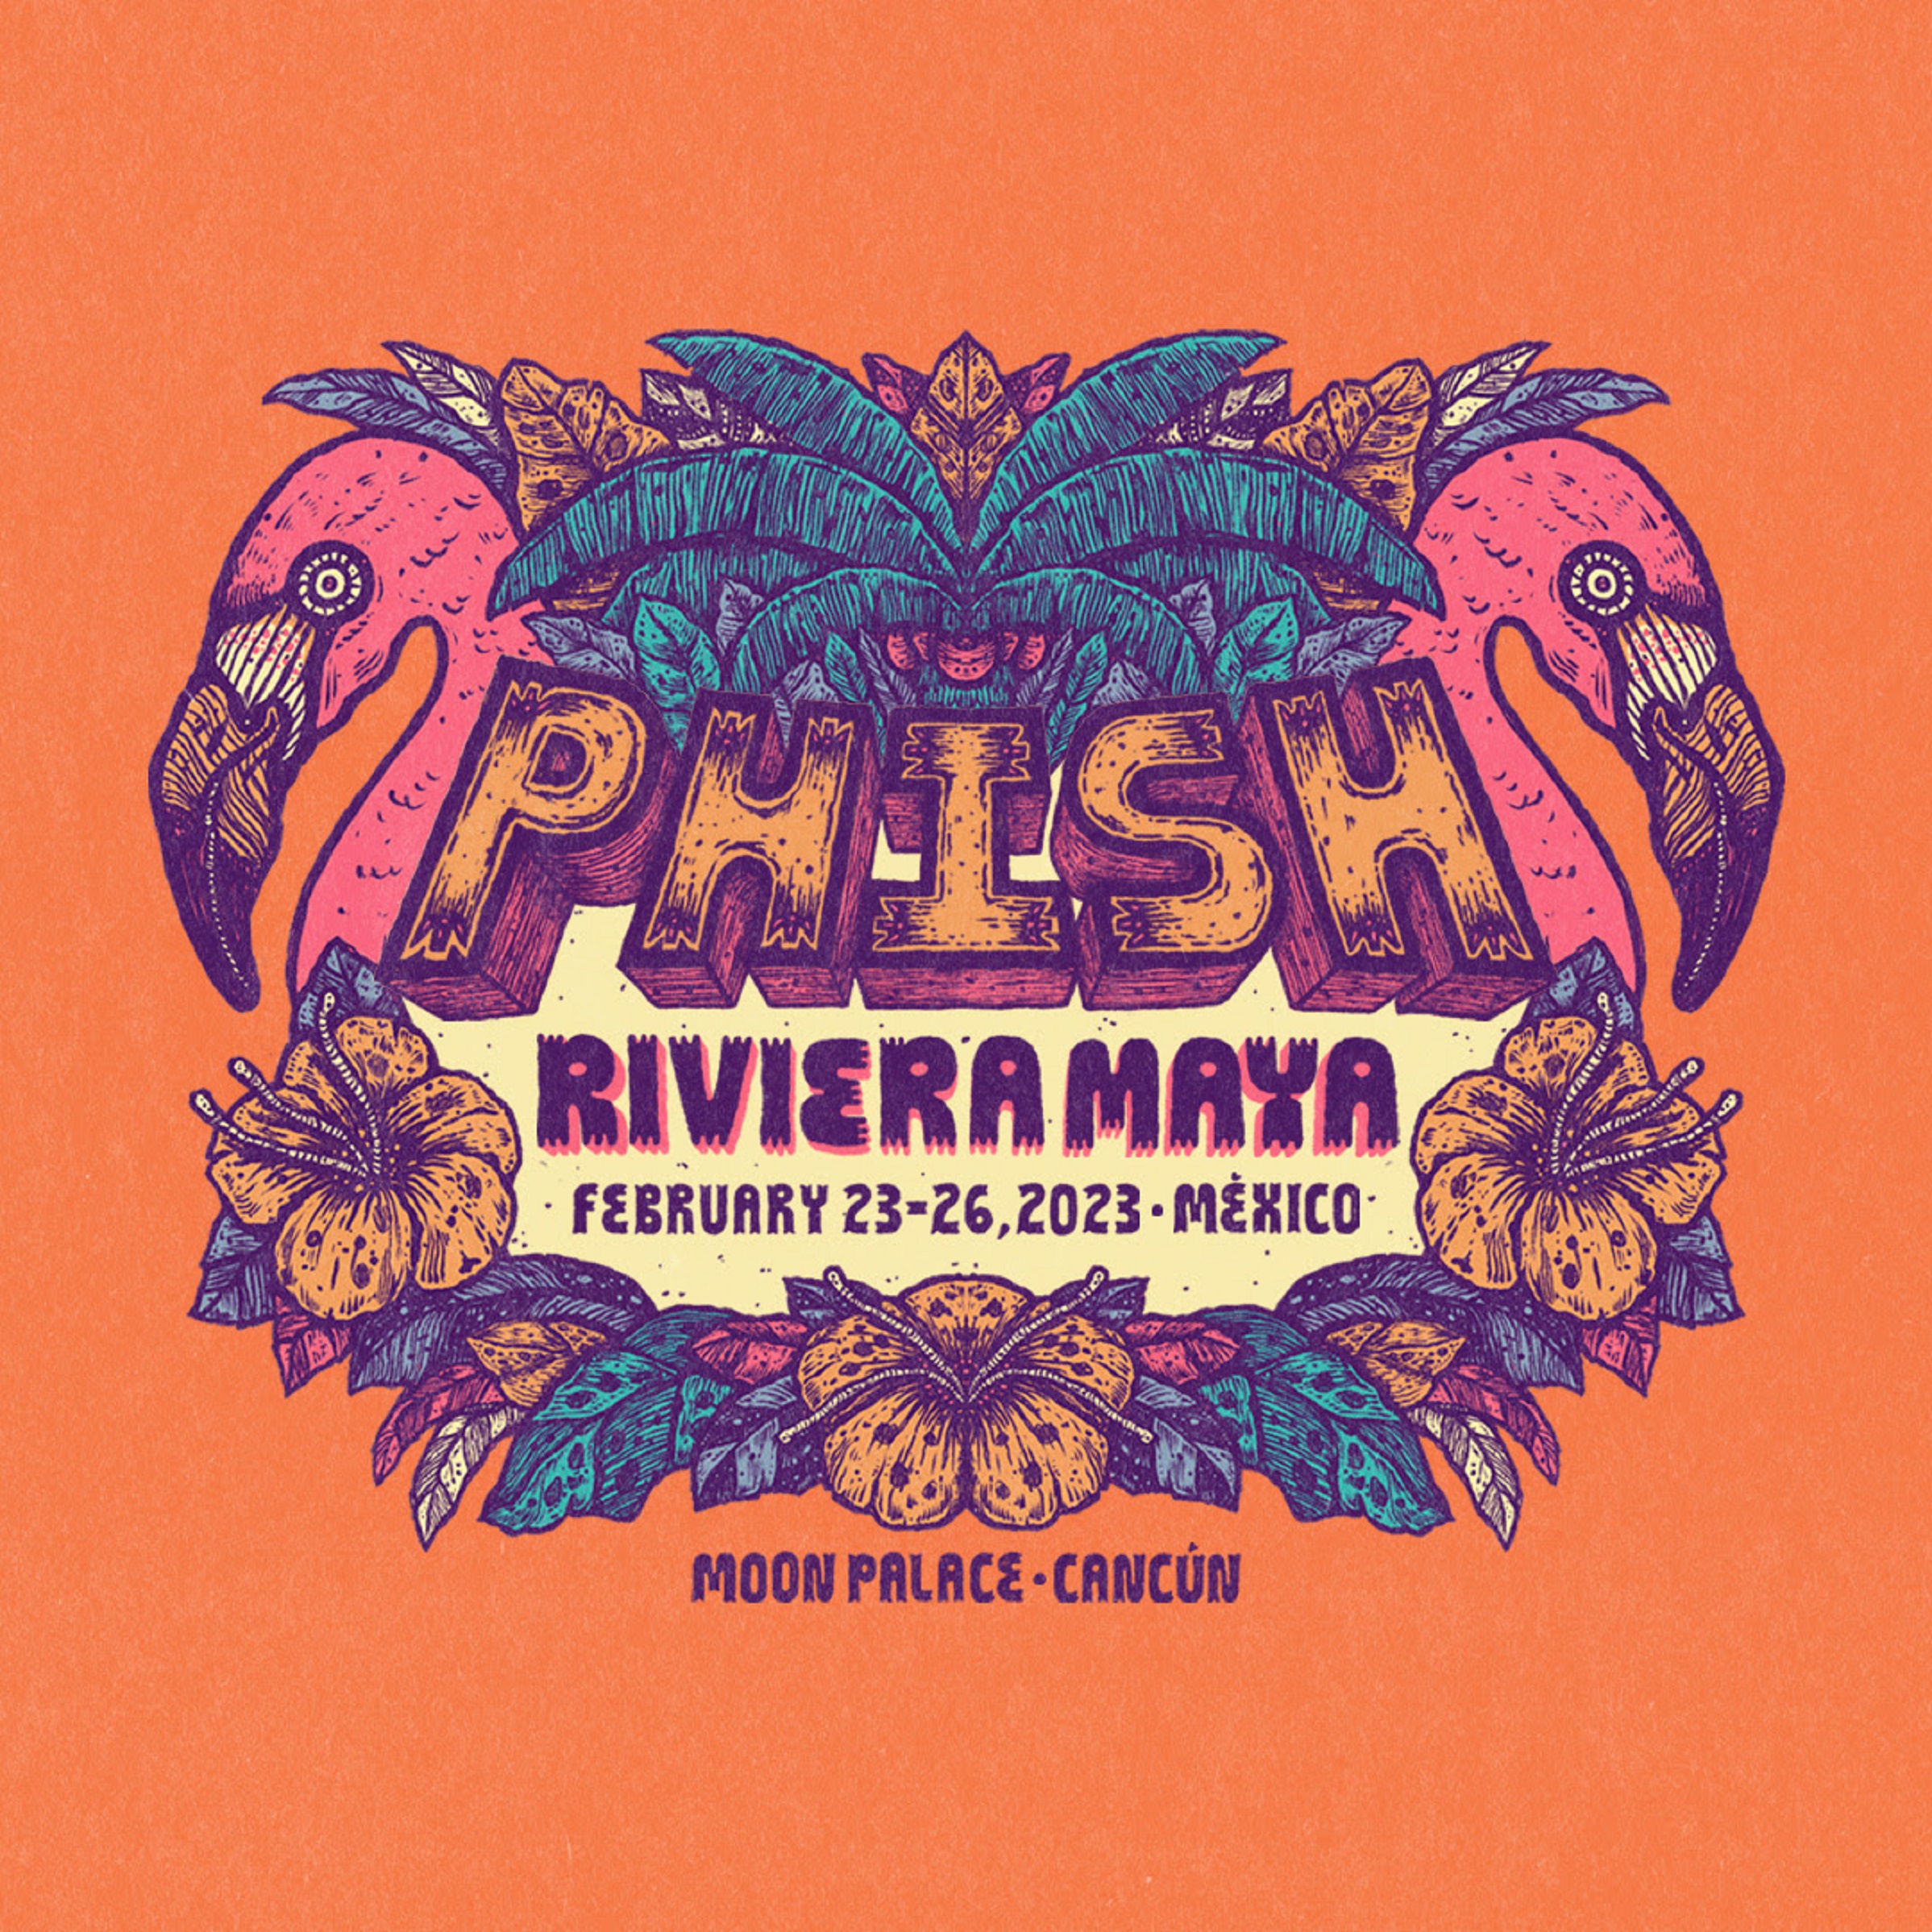 Phish: Riviera Maya destination concert announced for 2023